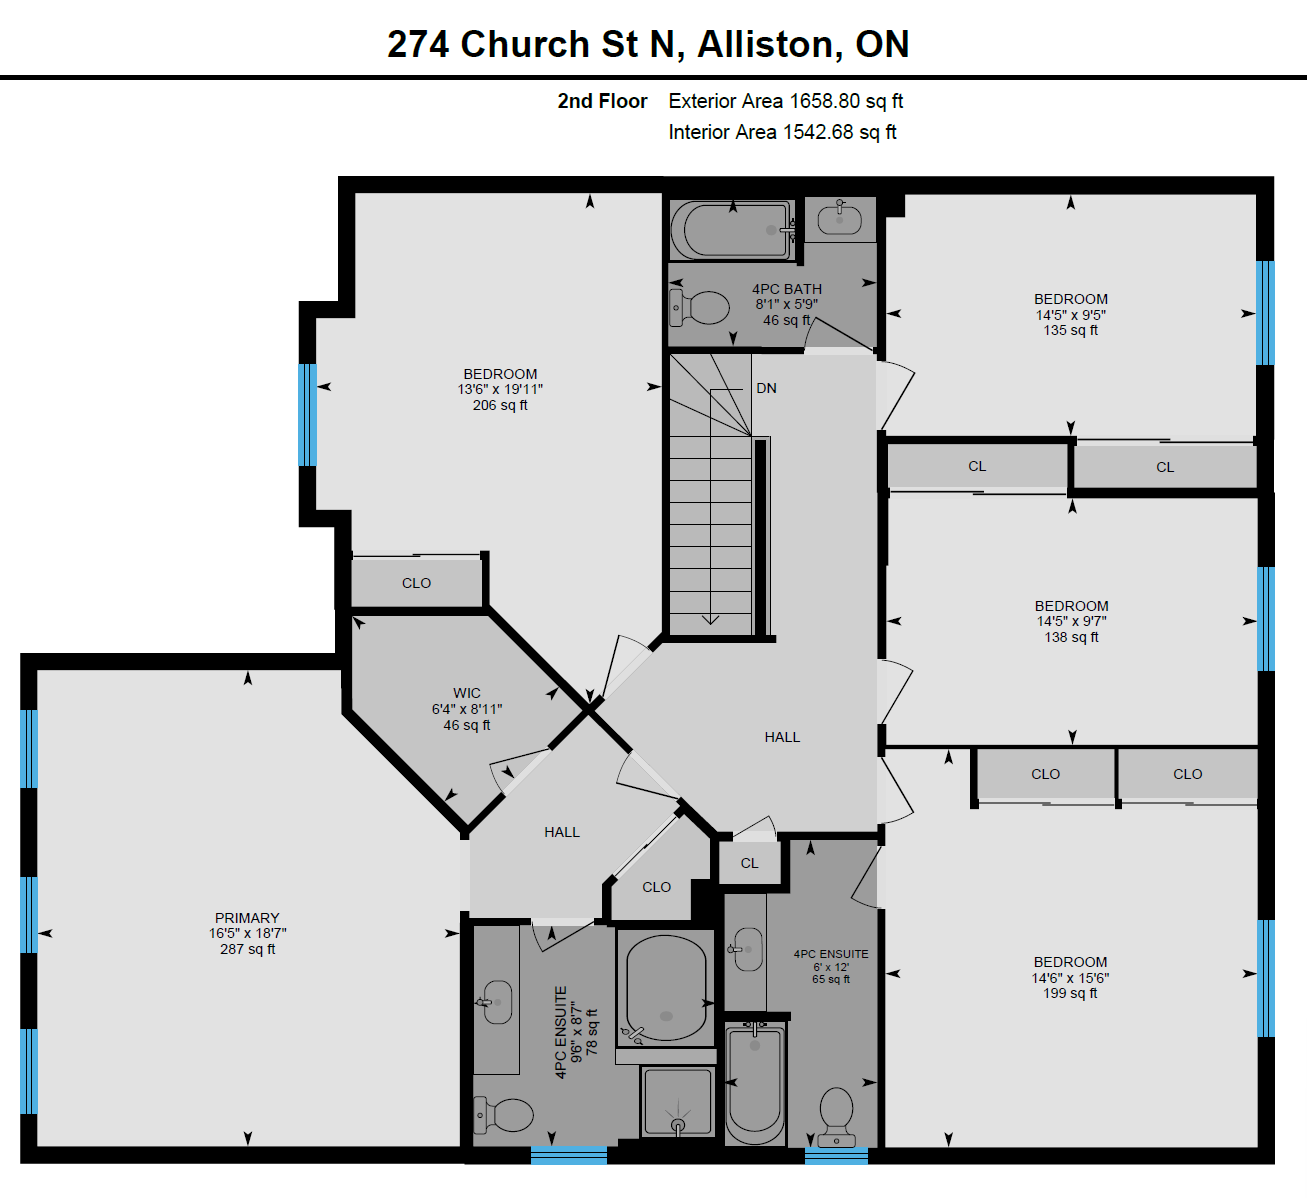 a floor plan for 274 church st n in alliston ontario